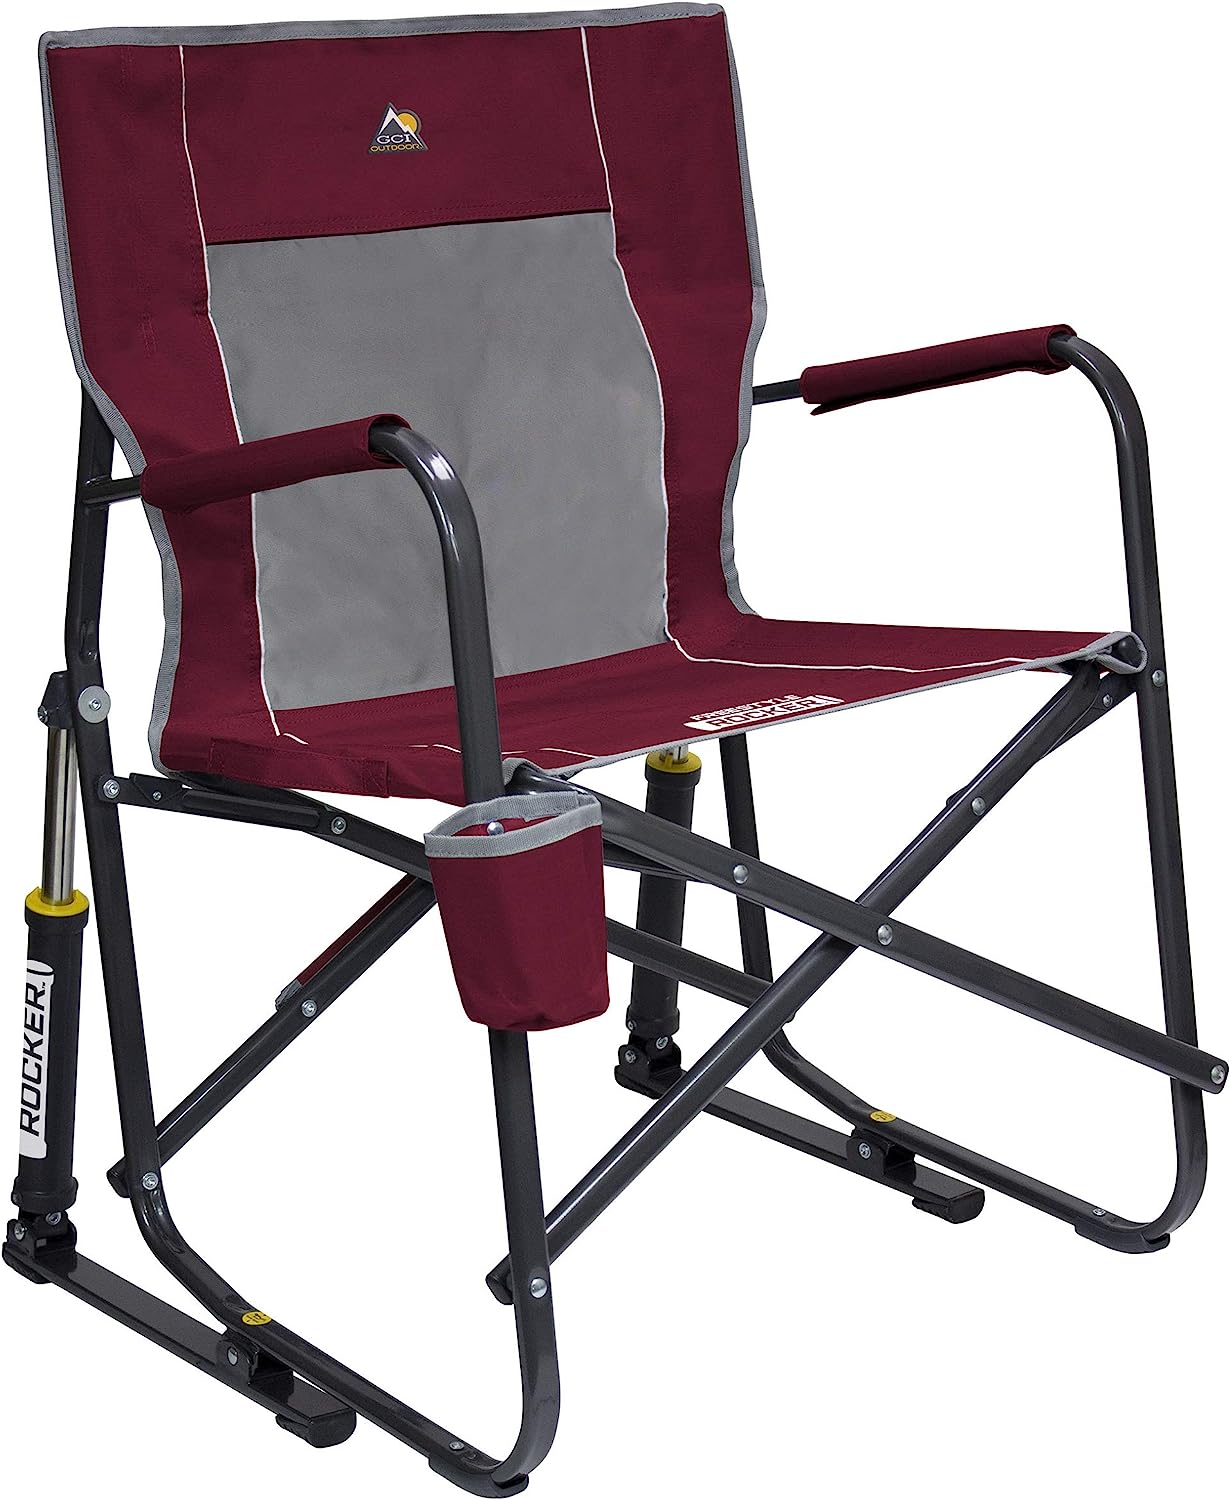 GCI Outdoor Rocker Camping Chair